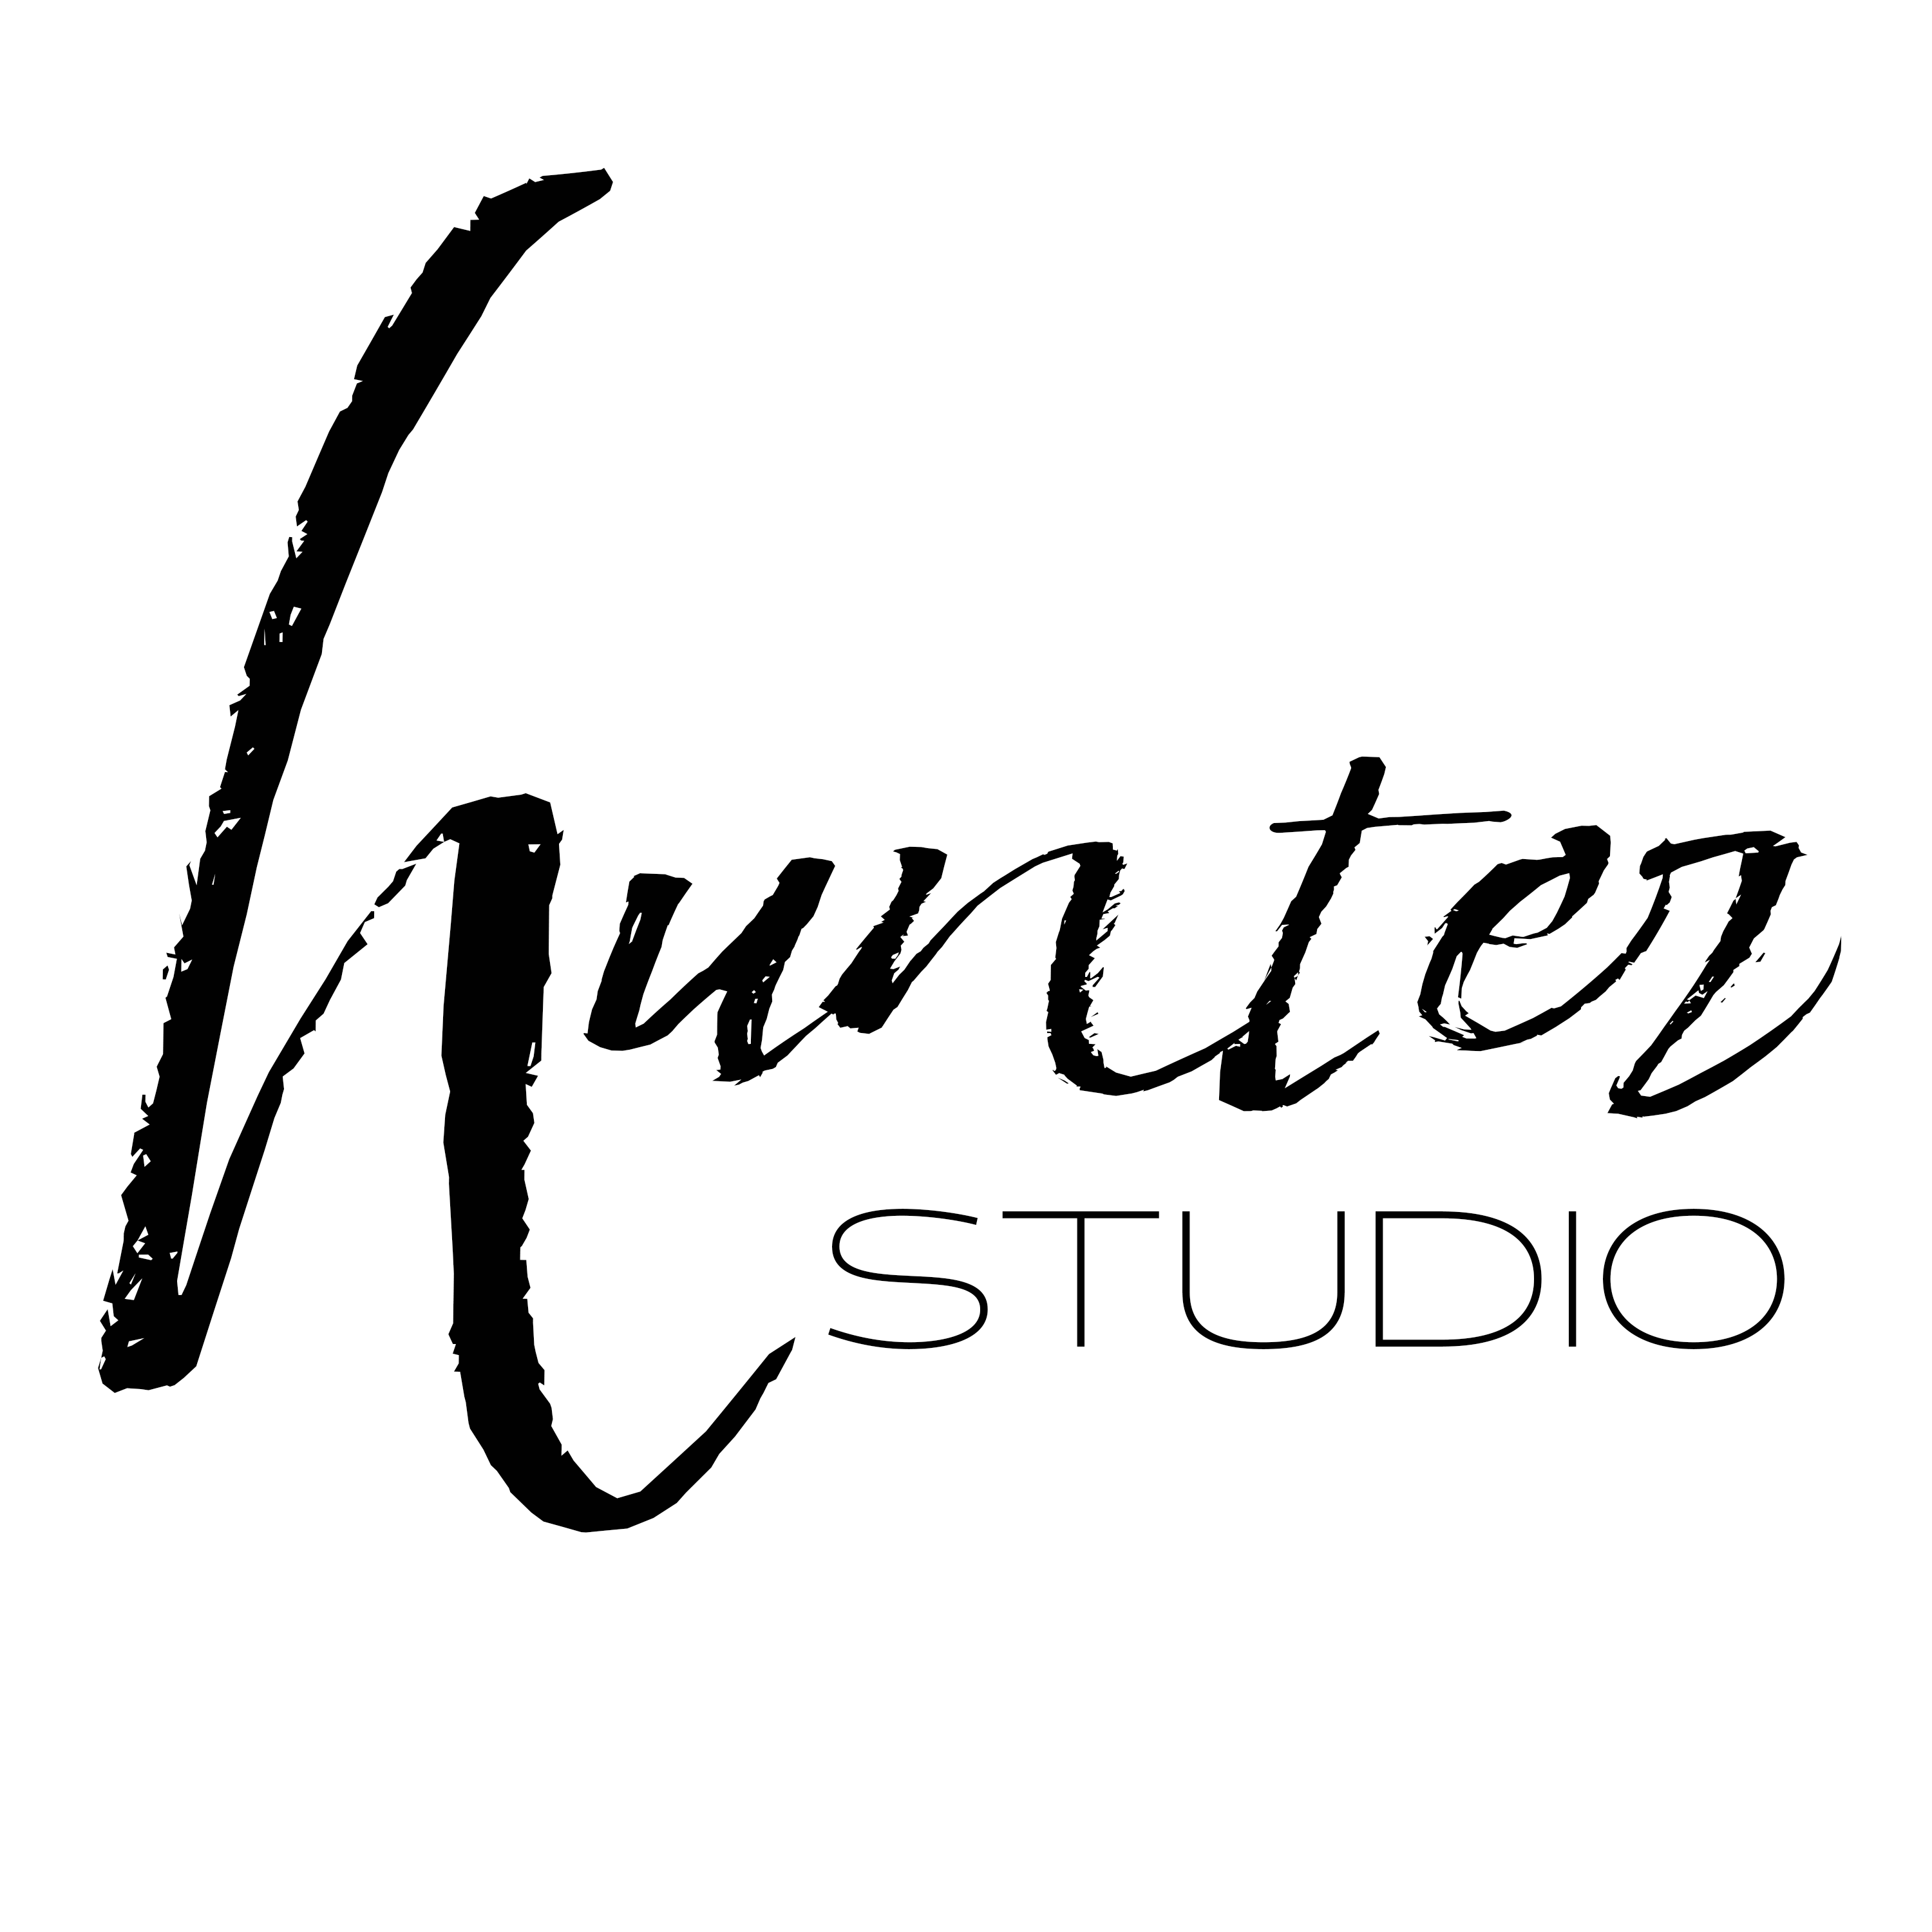 Ruth Hunter Studio